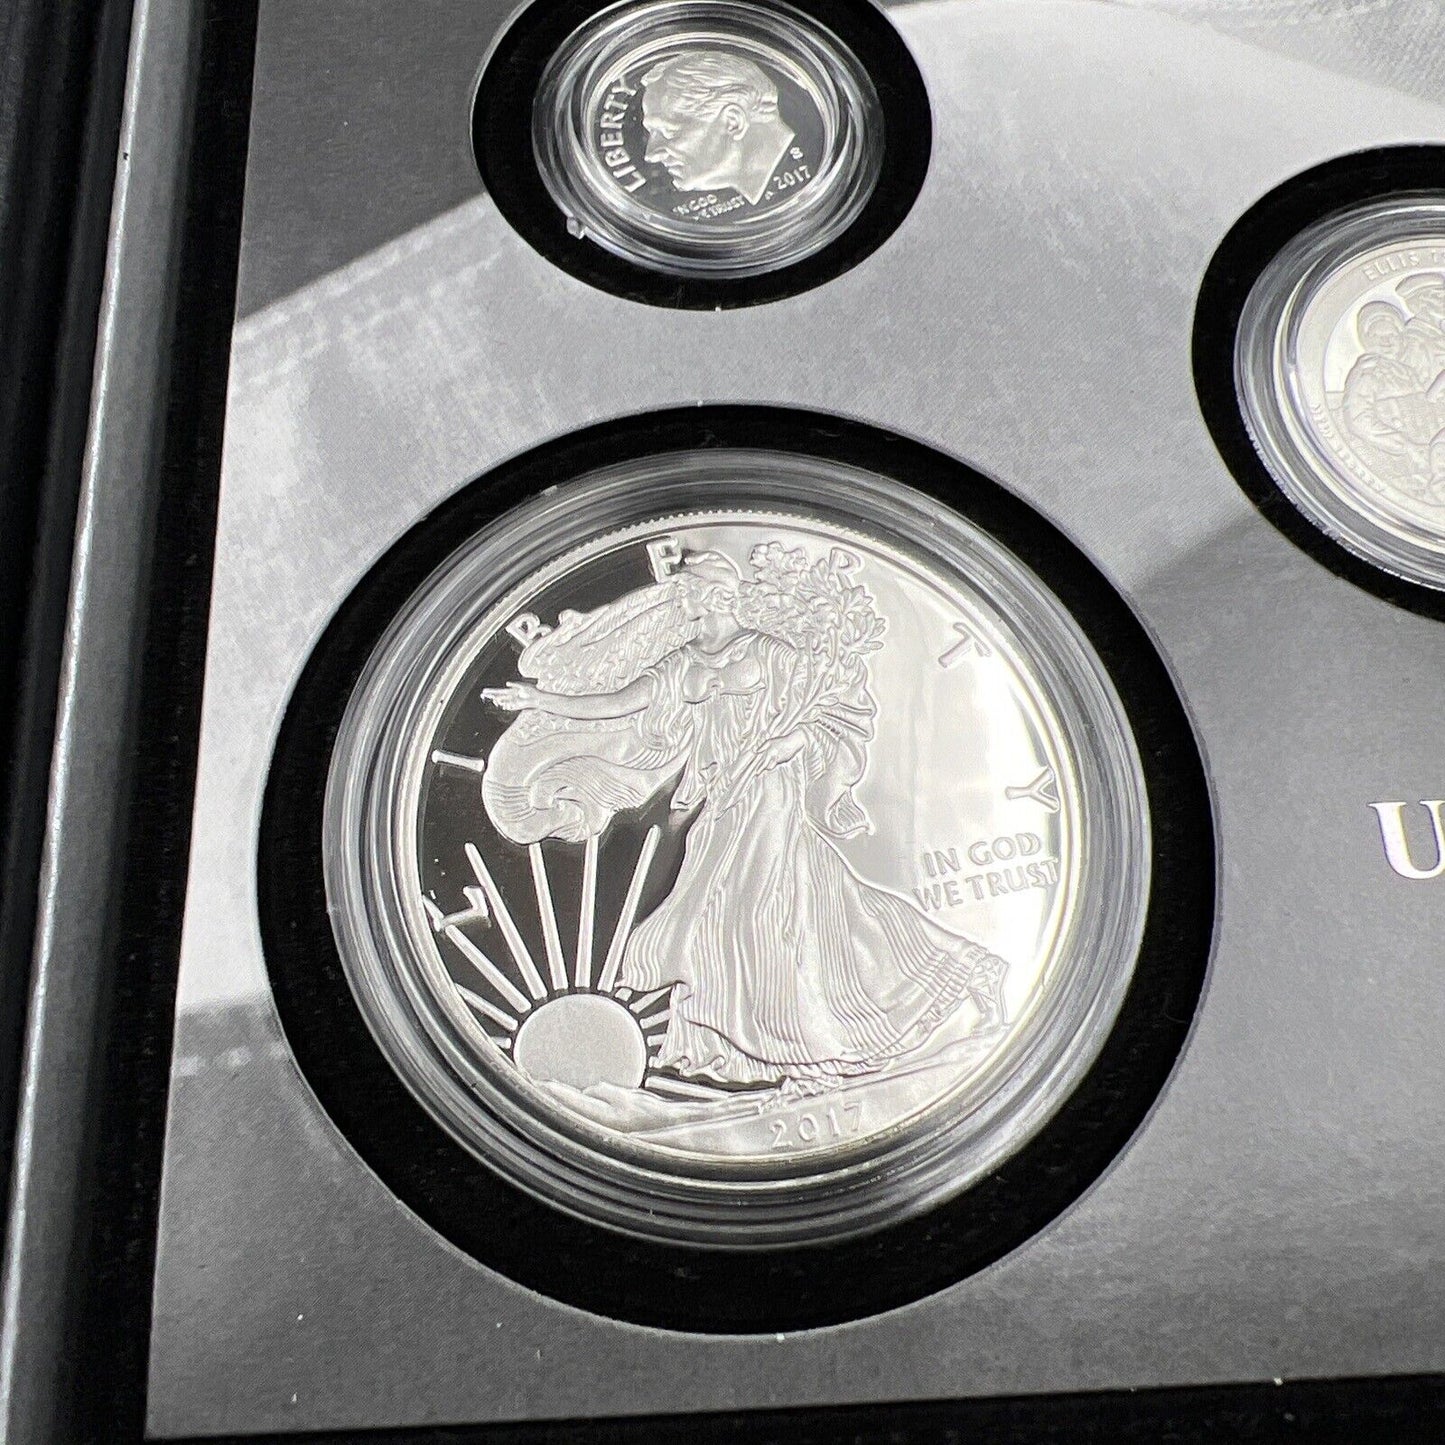 2017 United States Mint Limited Edition Silver Eagle Proof Set w/ Box & COA